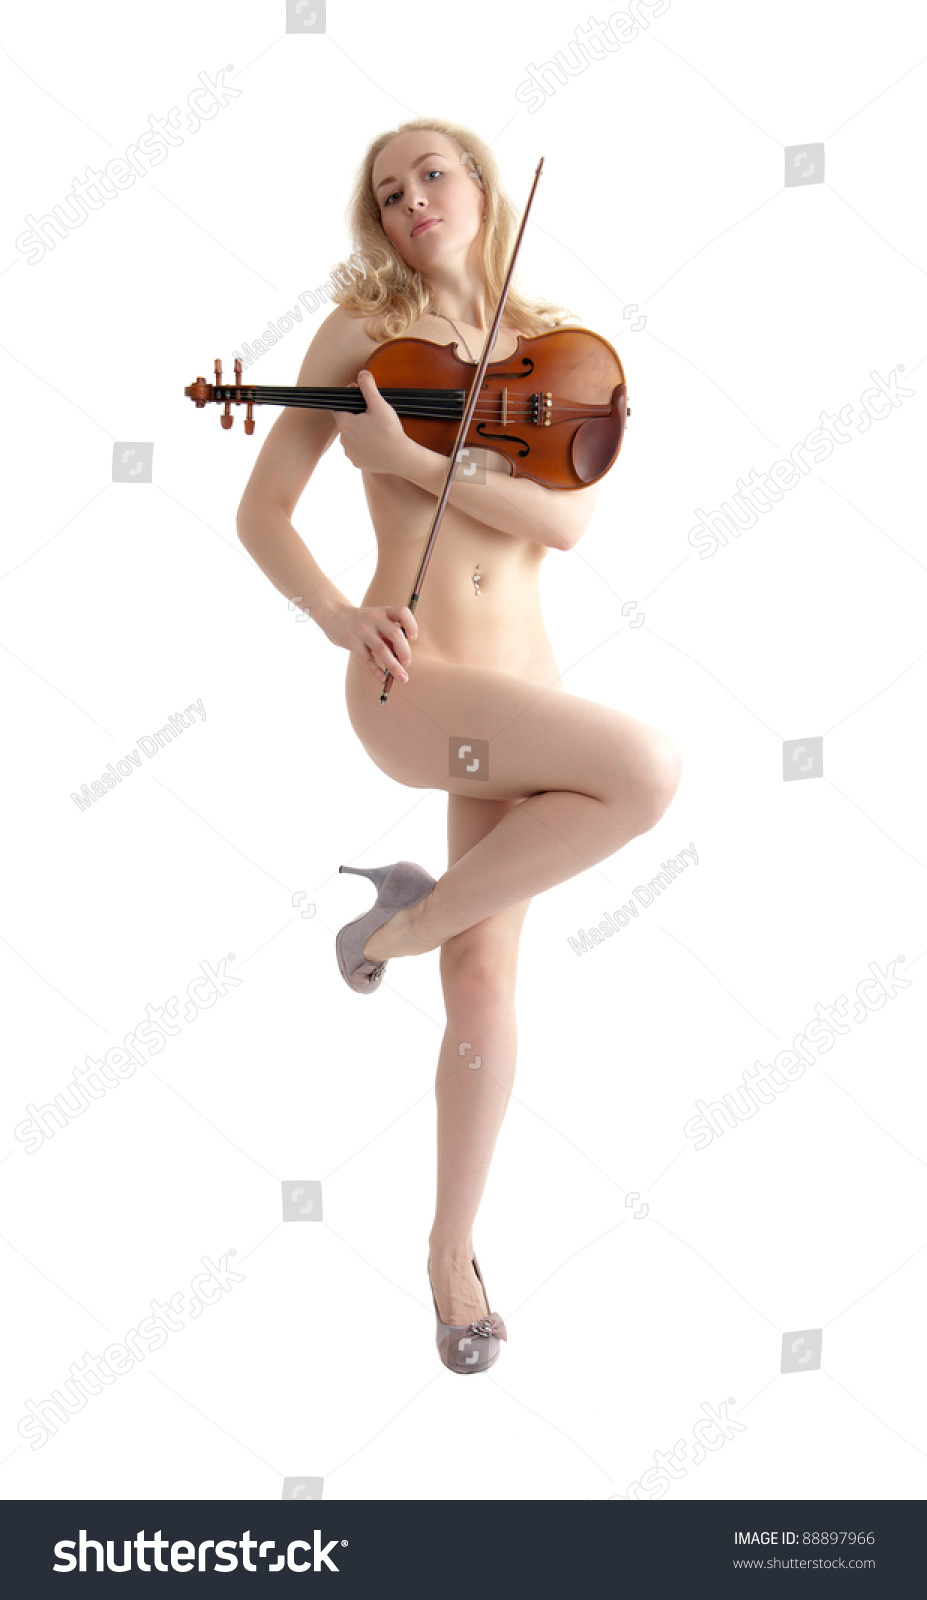 Naked women playing violin